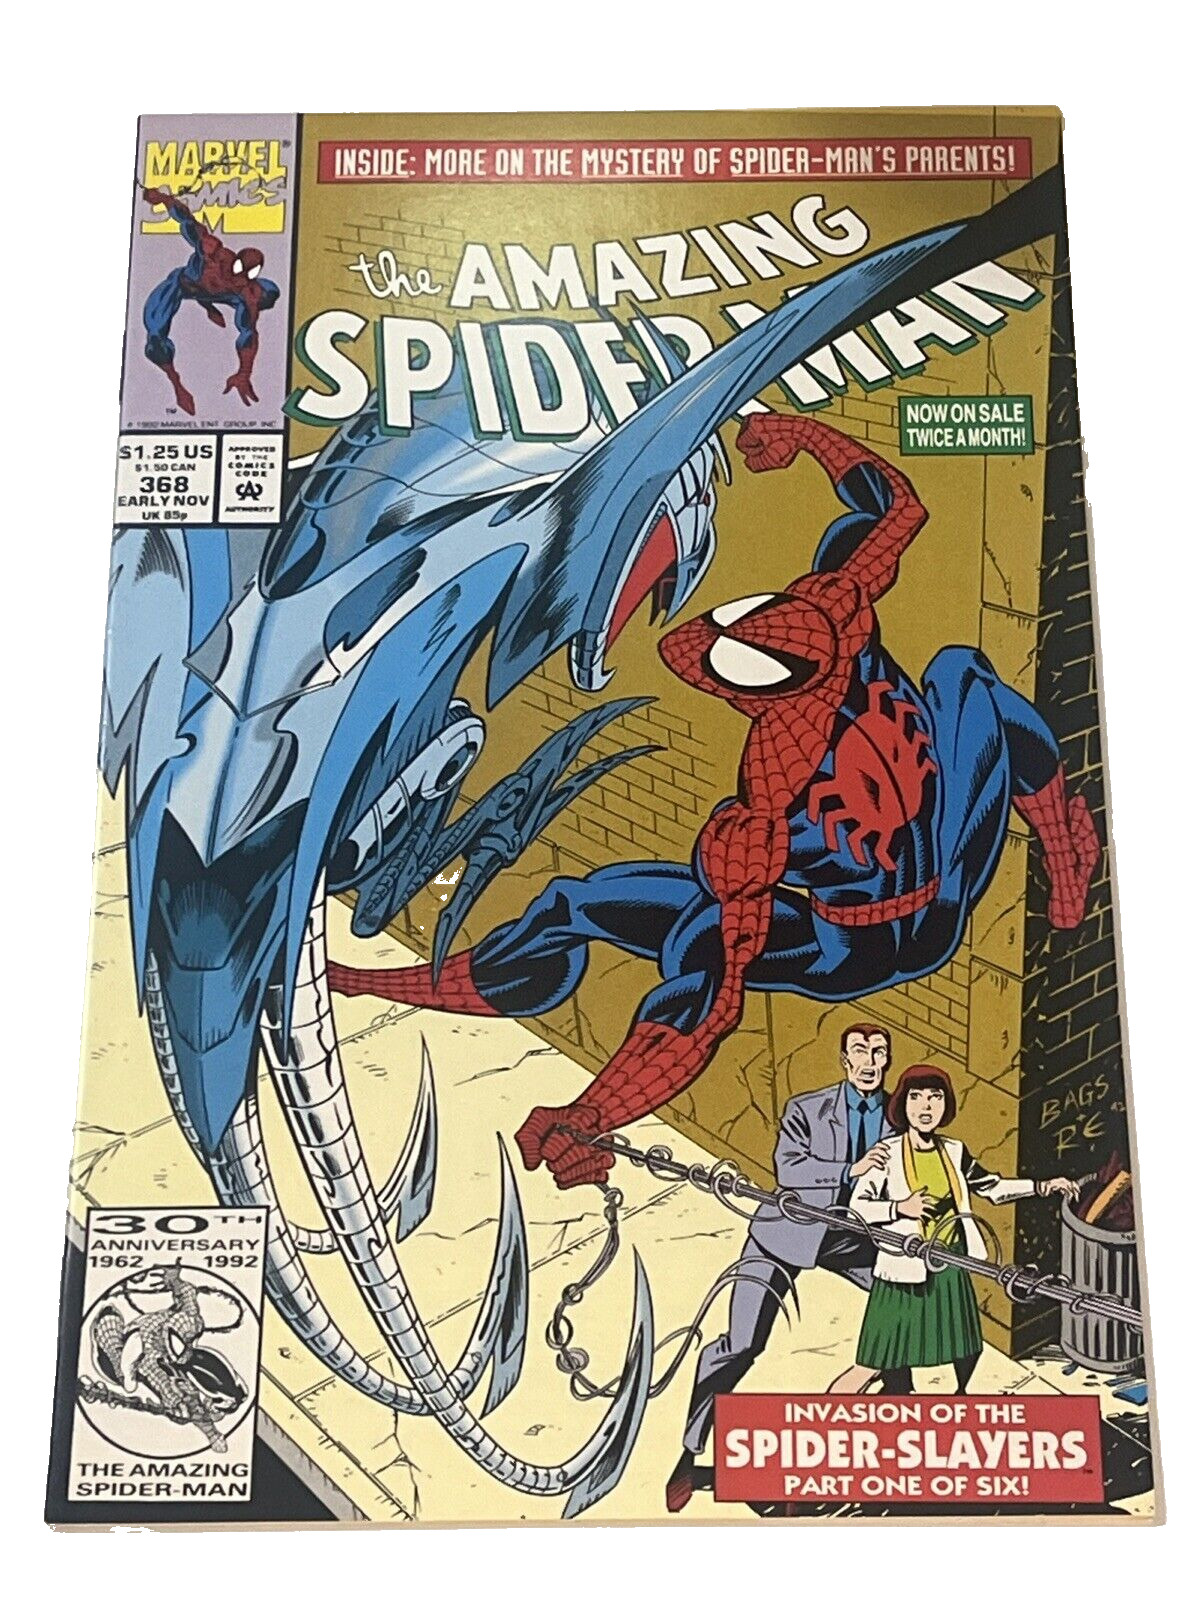 The Amazing Spider-Man #368 (Marvel Comics 1992)